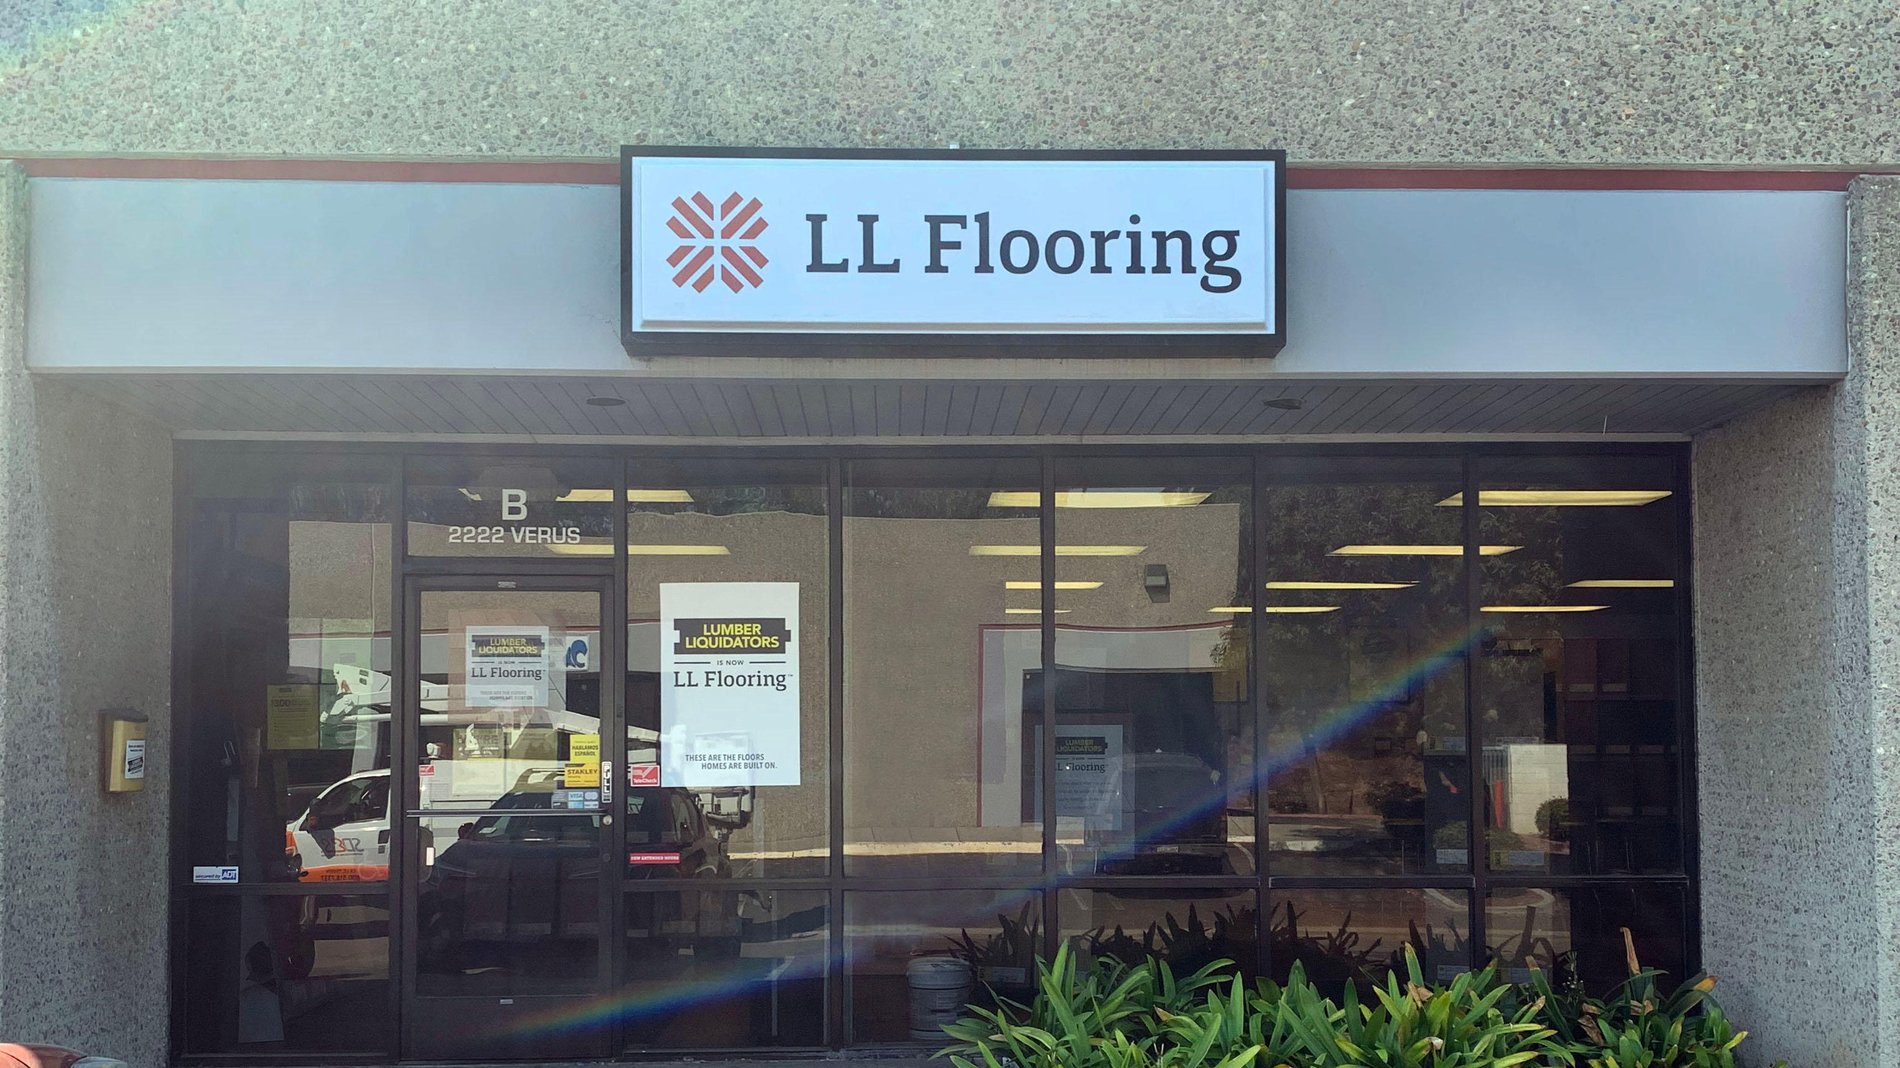 LL Flooring #1213 San Diego | 2222 Verus Street | Storefront